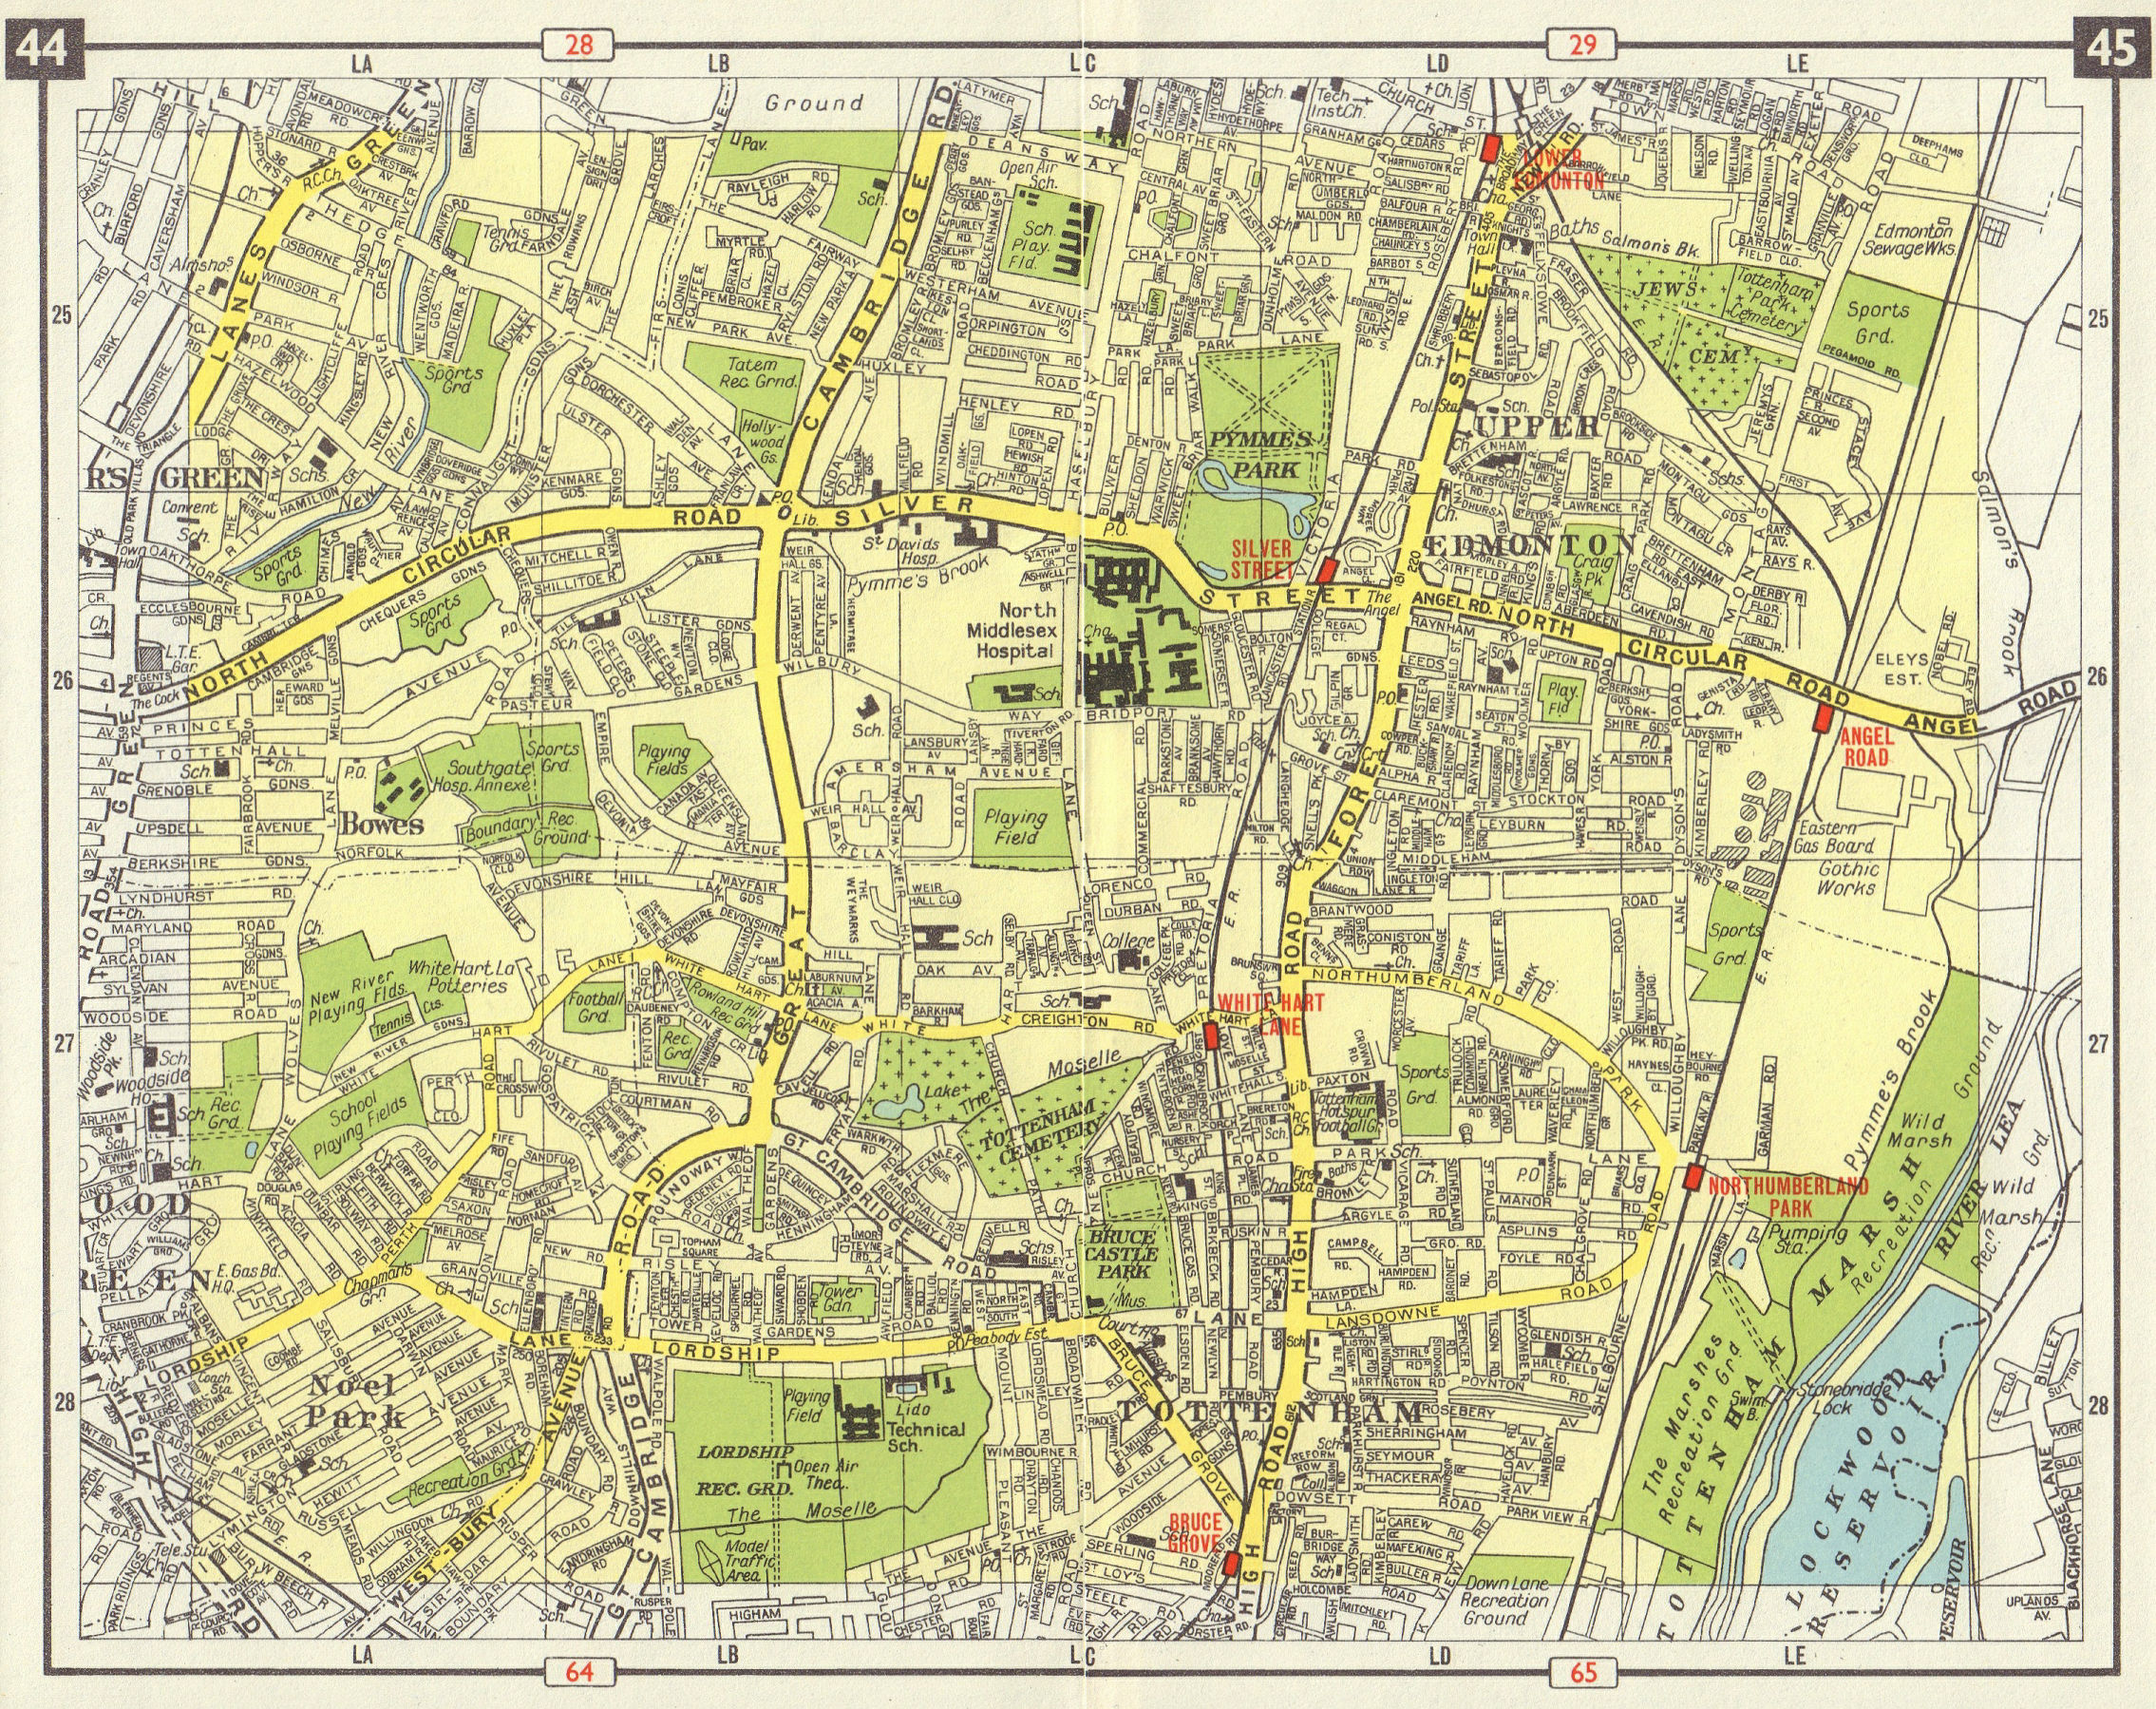 N LONDON Noel Park Bowes Tottenham Edmonton Wood/Palmer's Green 1965 old map